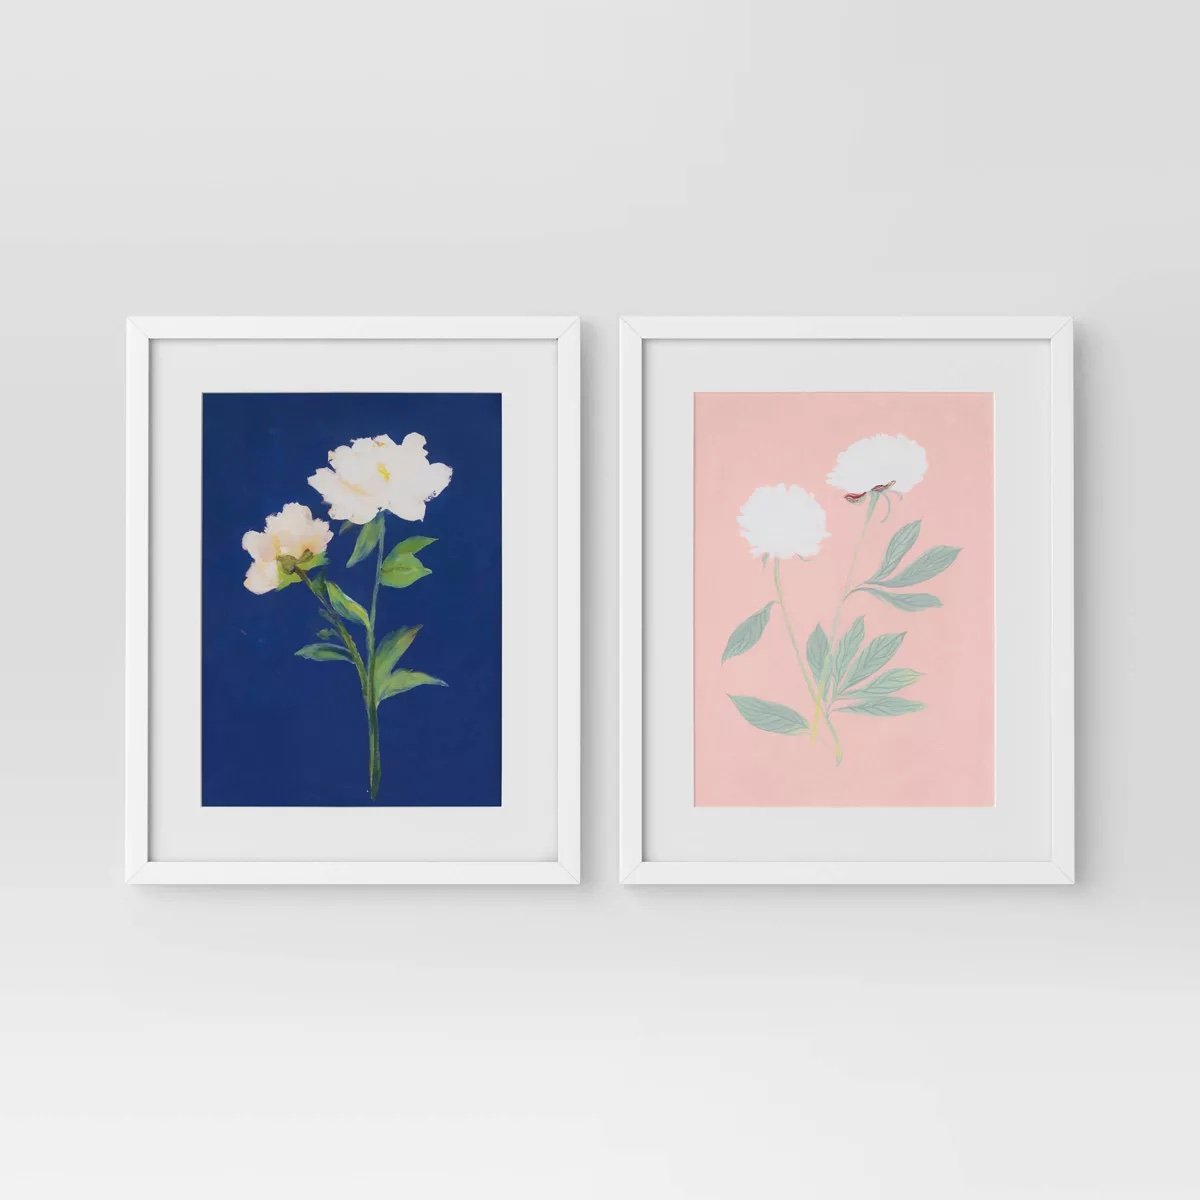 Target - $50 - 'Pink and Blue' Floral Framed Posters